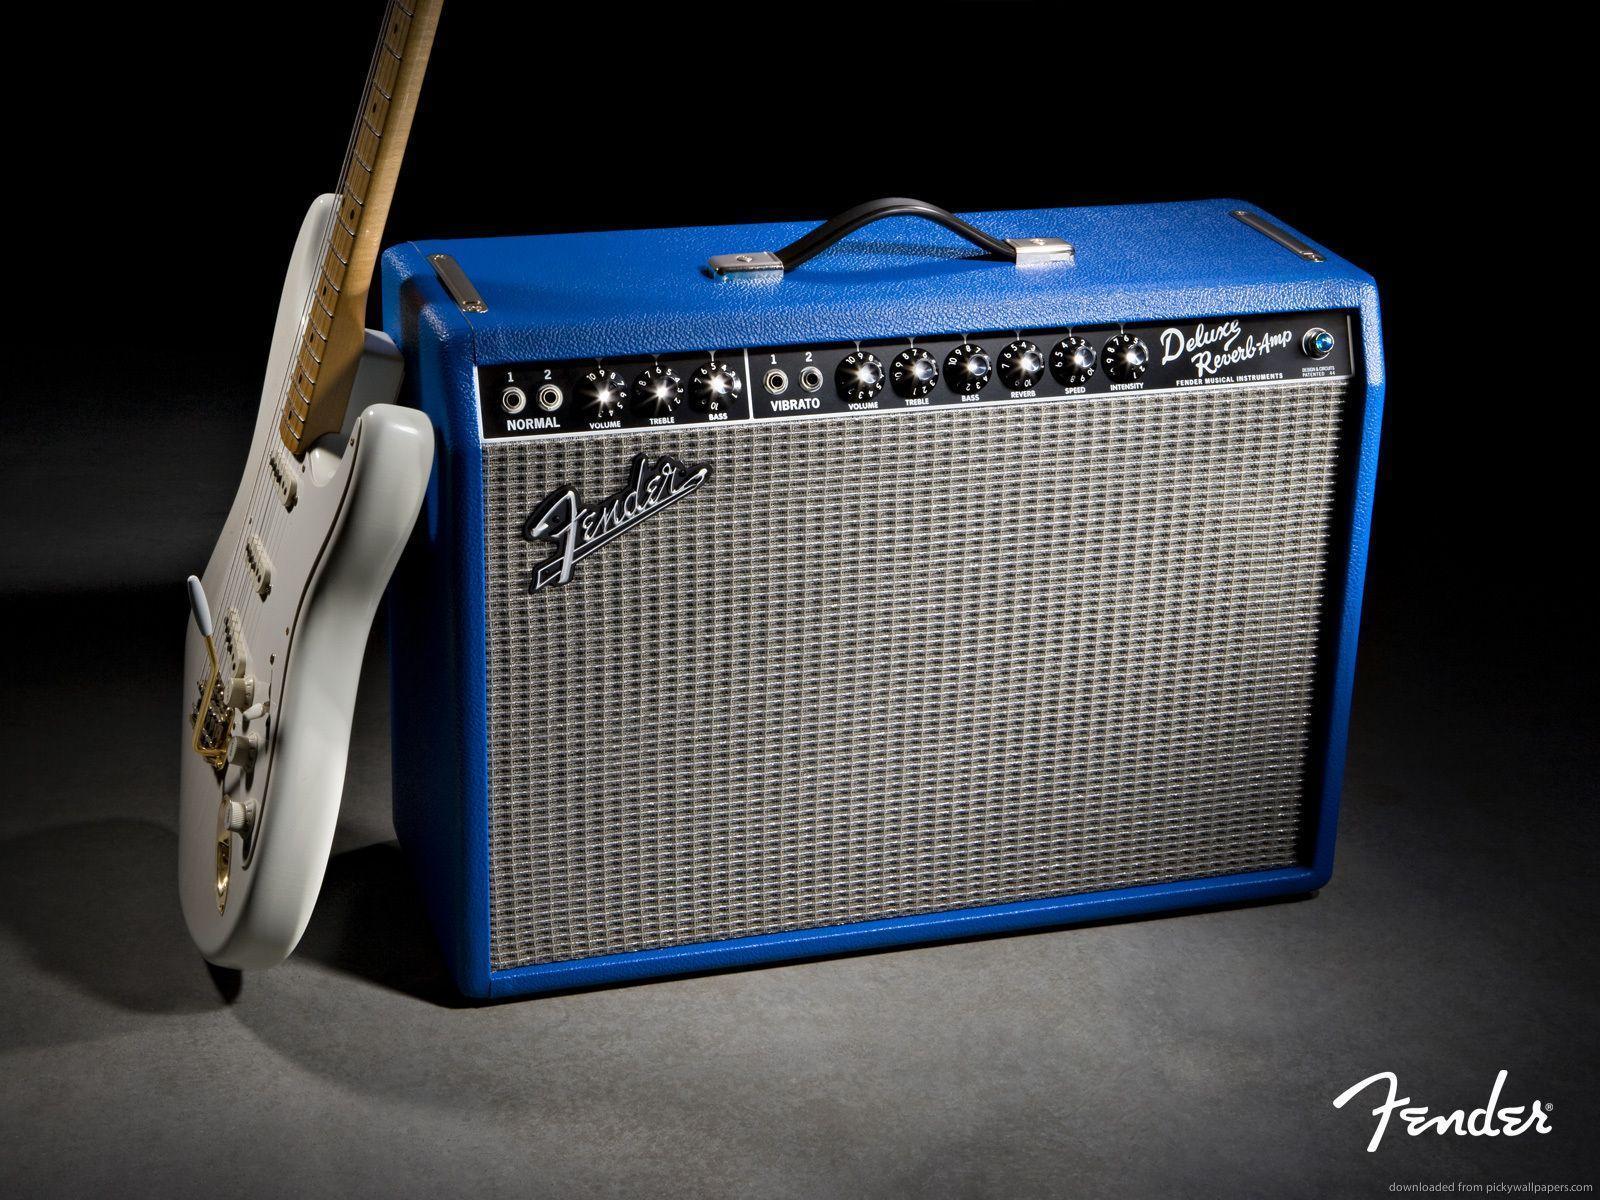 Silver Fender Guitar and Blue Amplifier Wallpaper HD Fender Guitar